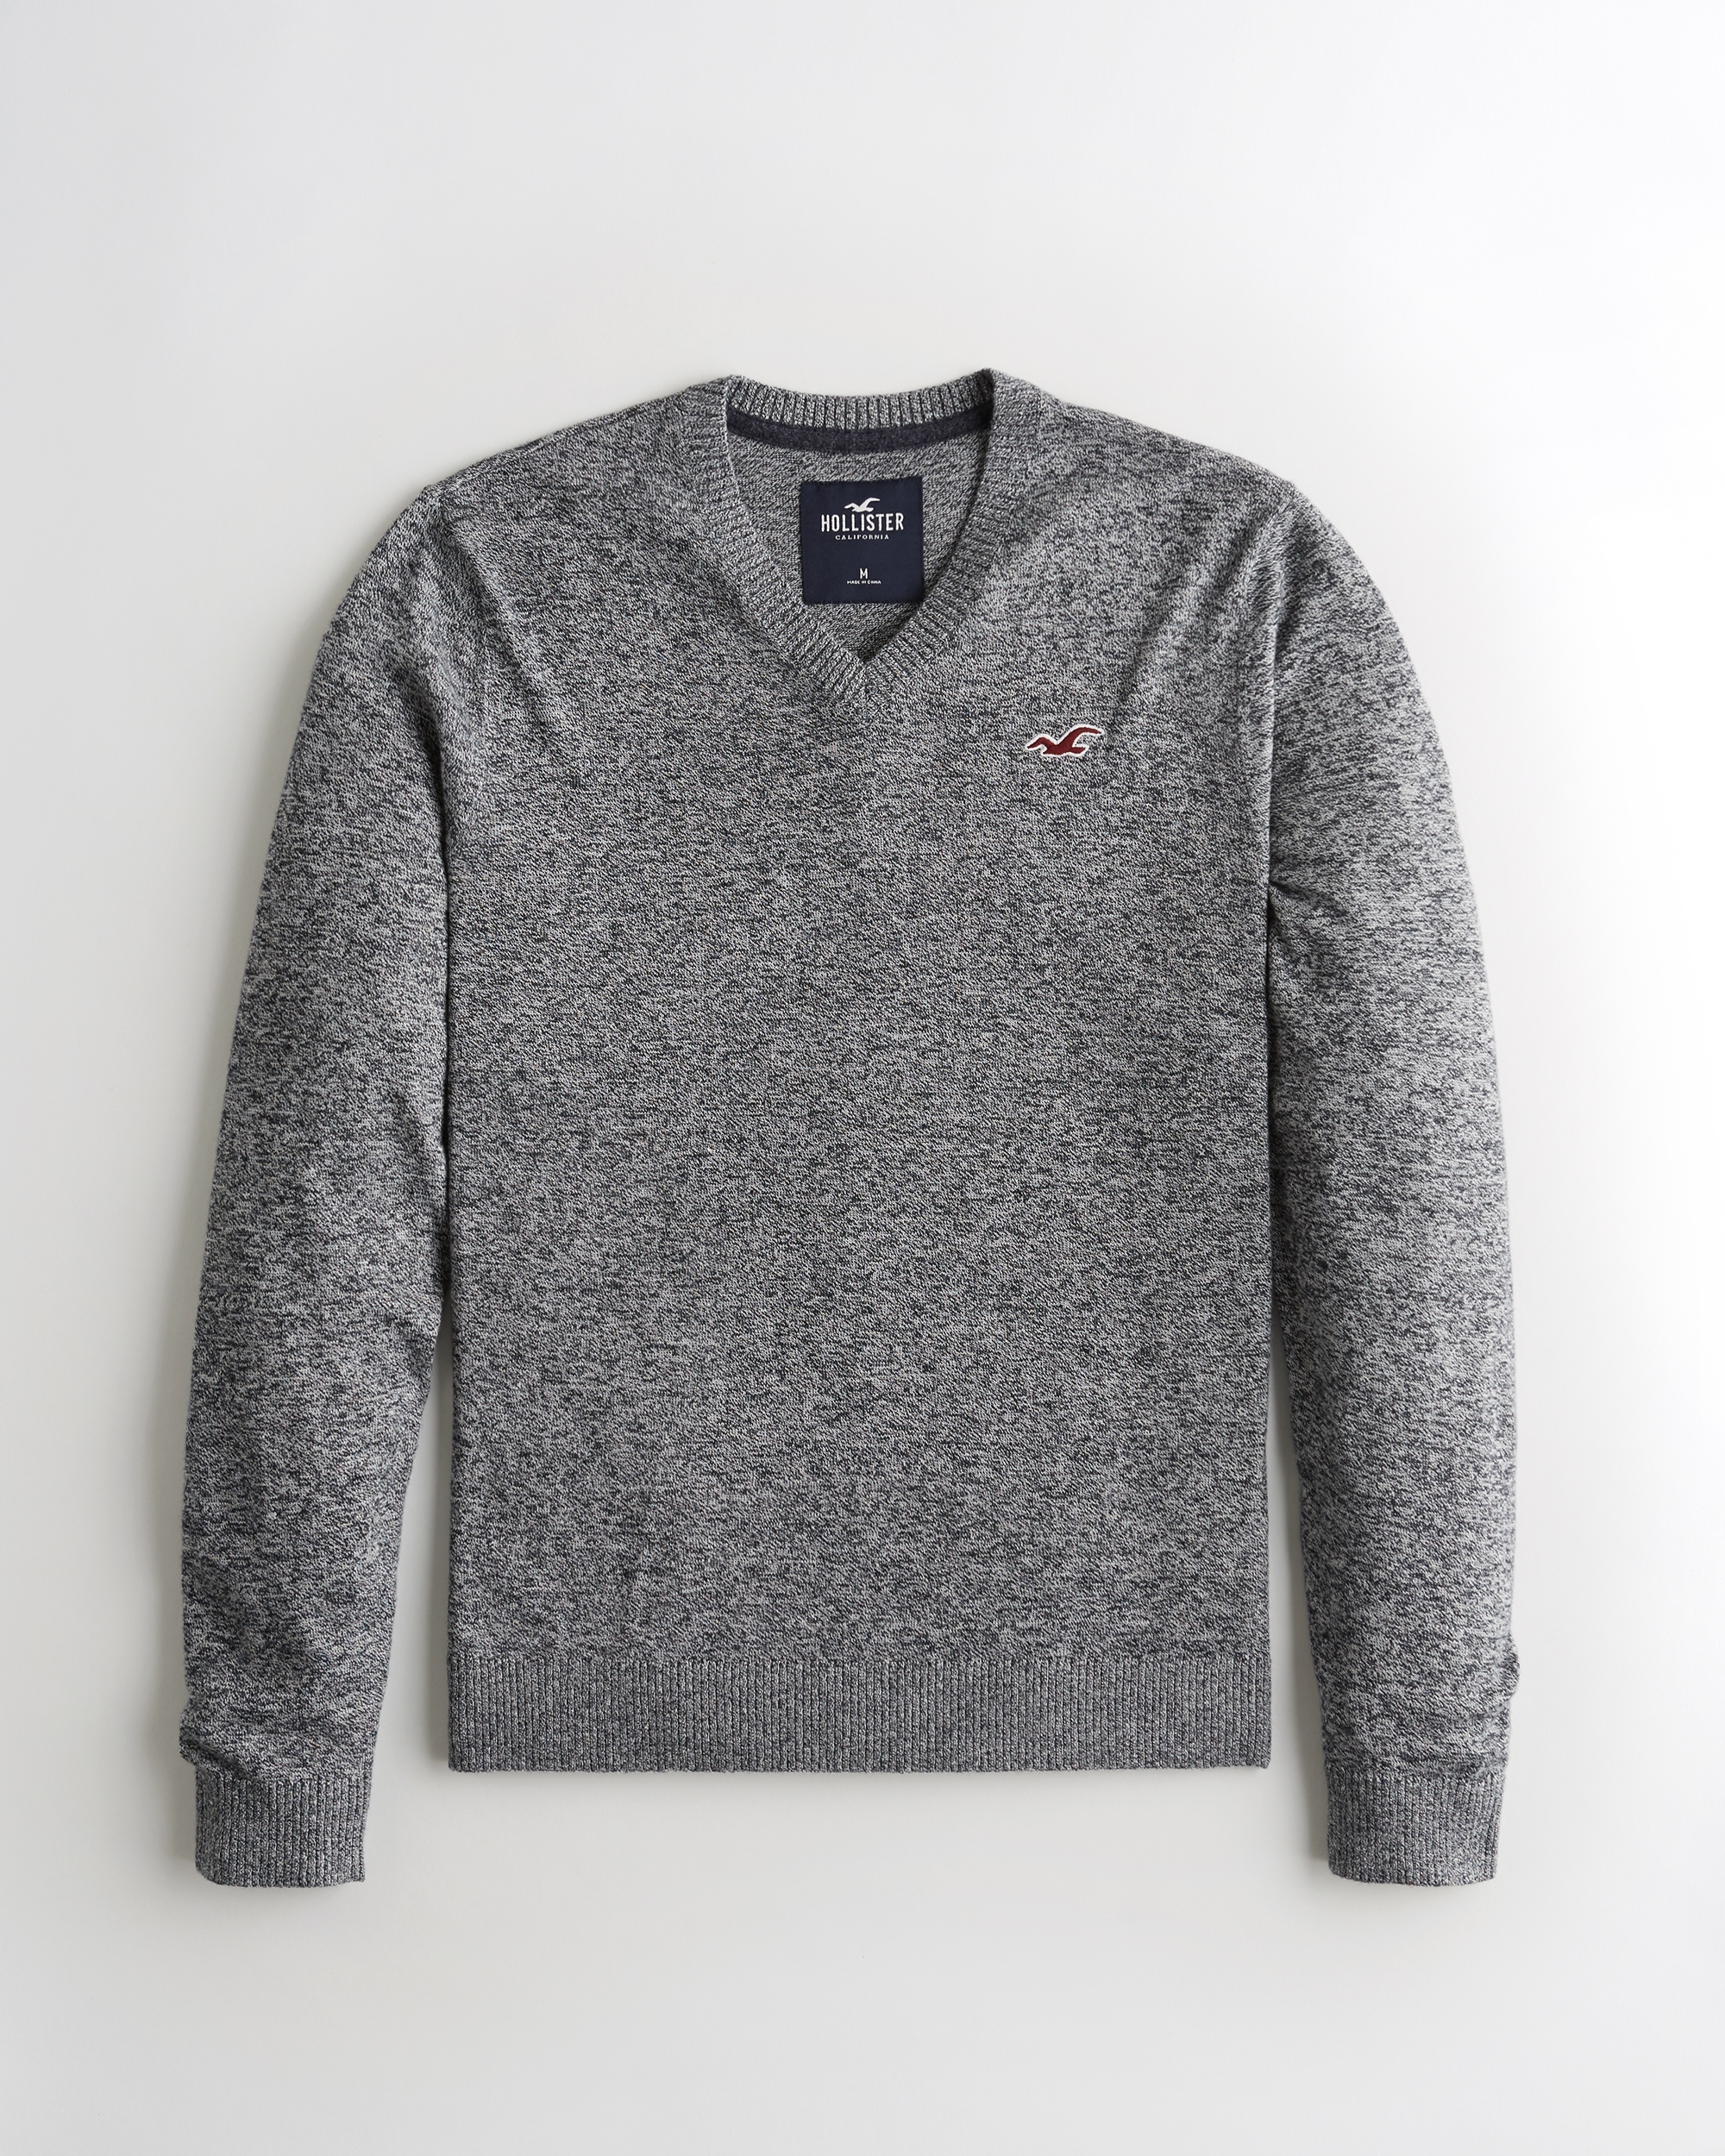 hollister sweater Cheaper Than Retail 